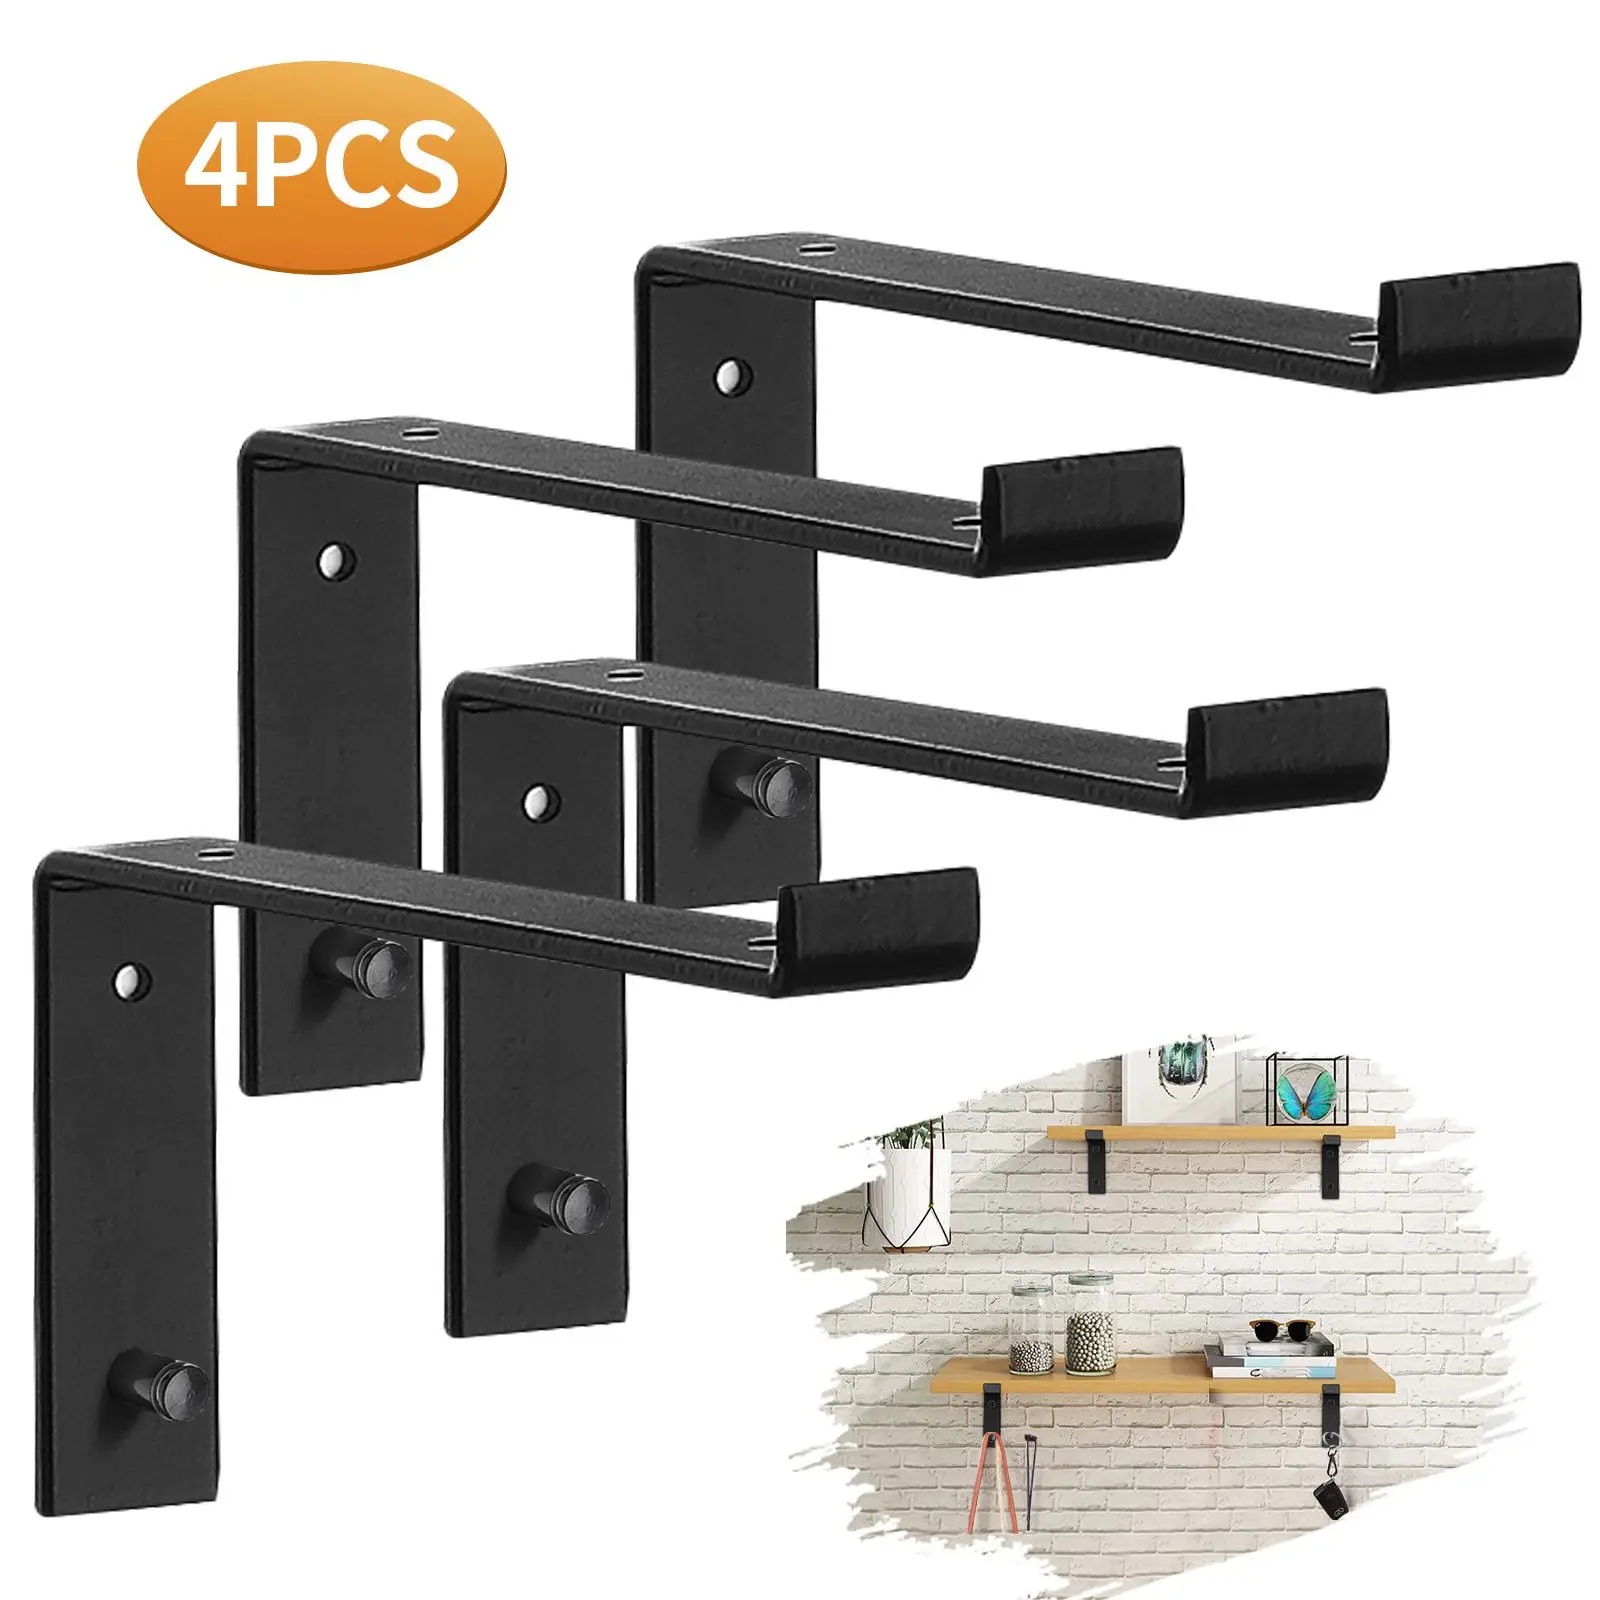 

4 PCS Hook Shelf Brackets with Screws Industrial 90 Degree Angle Braces Brackets Wall Mounted Shelving Bench Table Shelf Holder